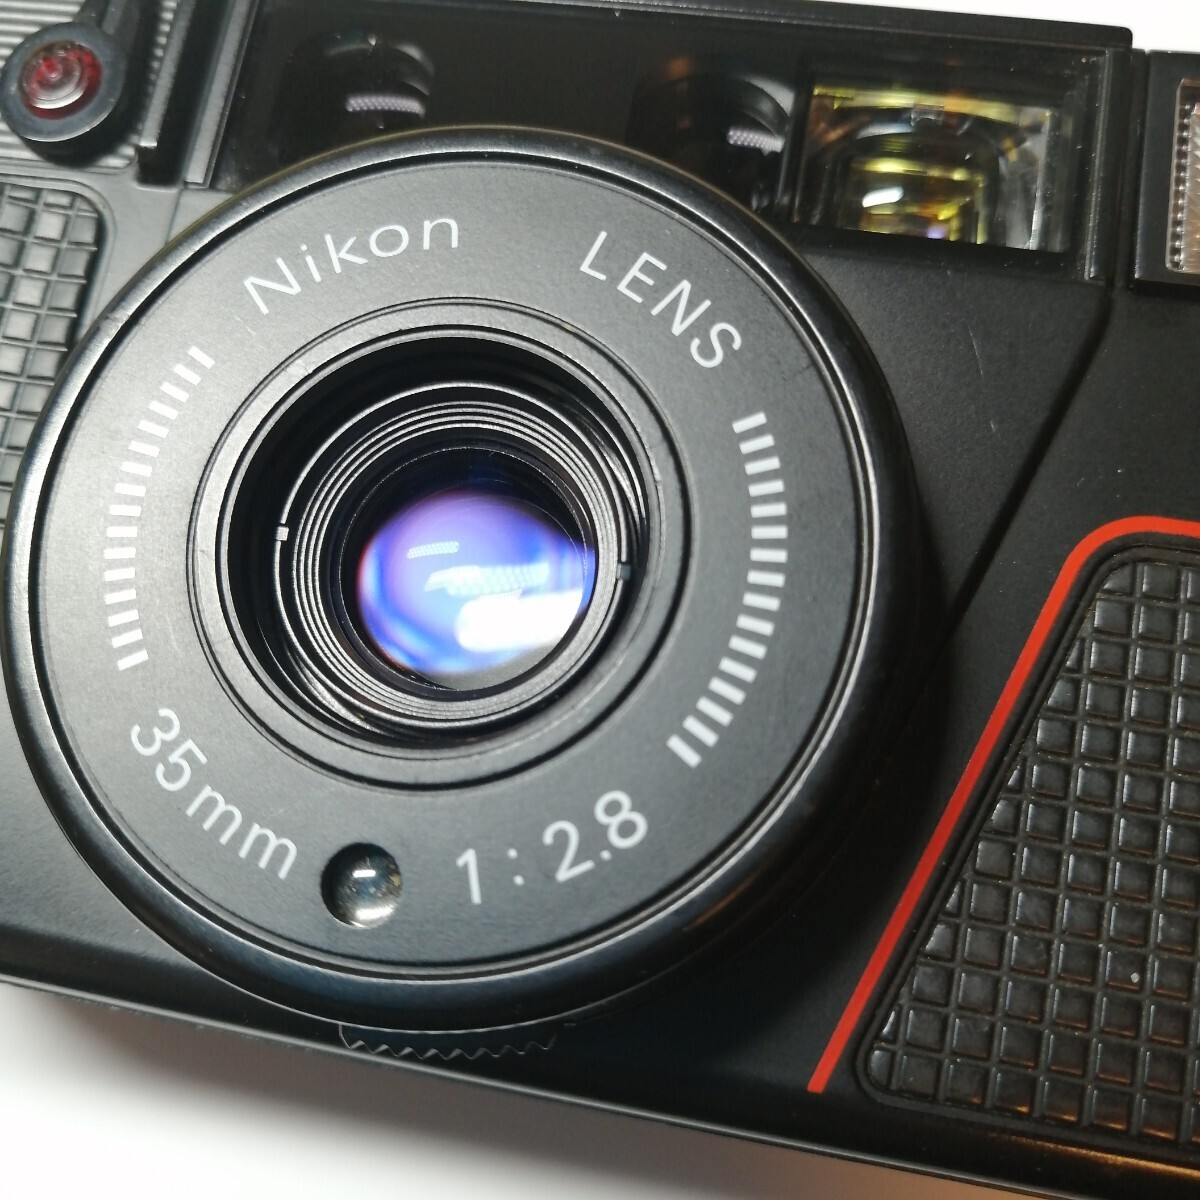  work properly beautiful goods Nikon L35AD2pi kai chi#708 compact film camera 1 jpy start 